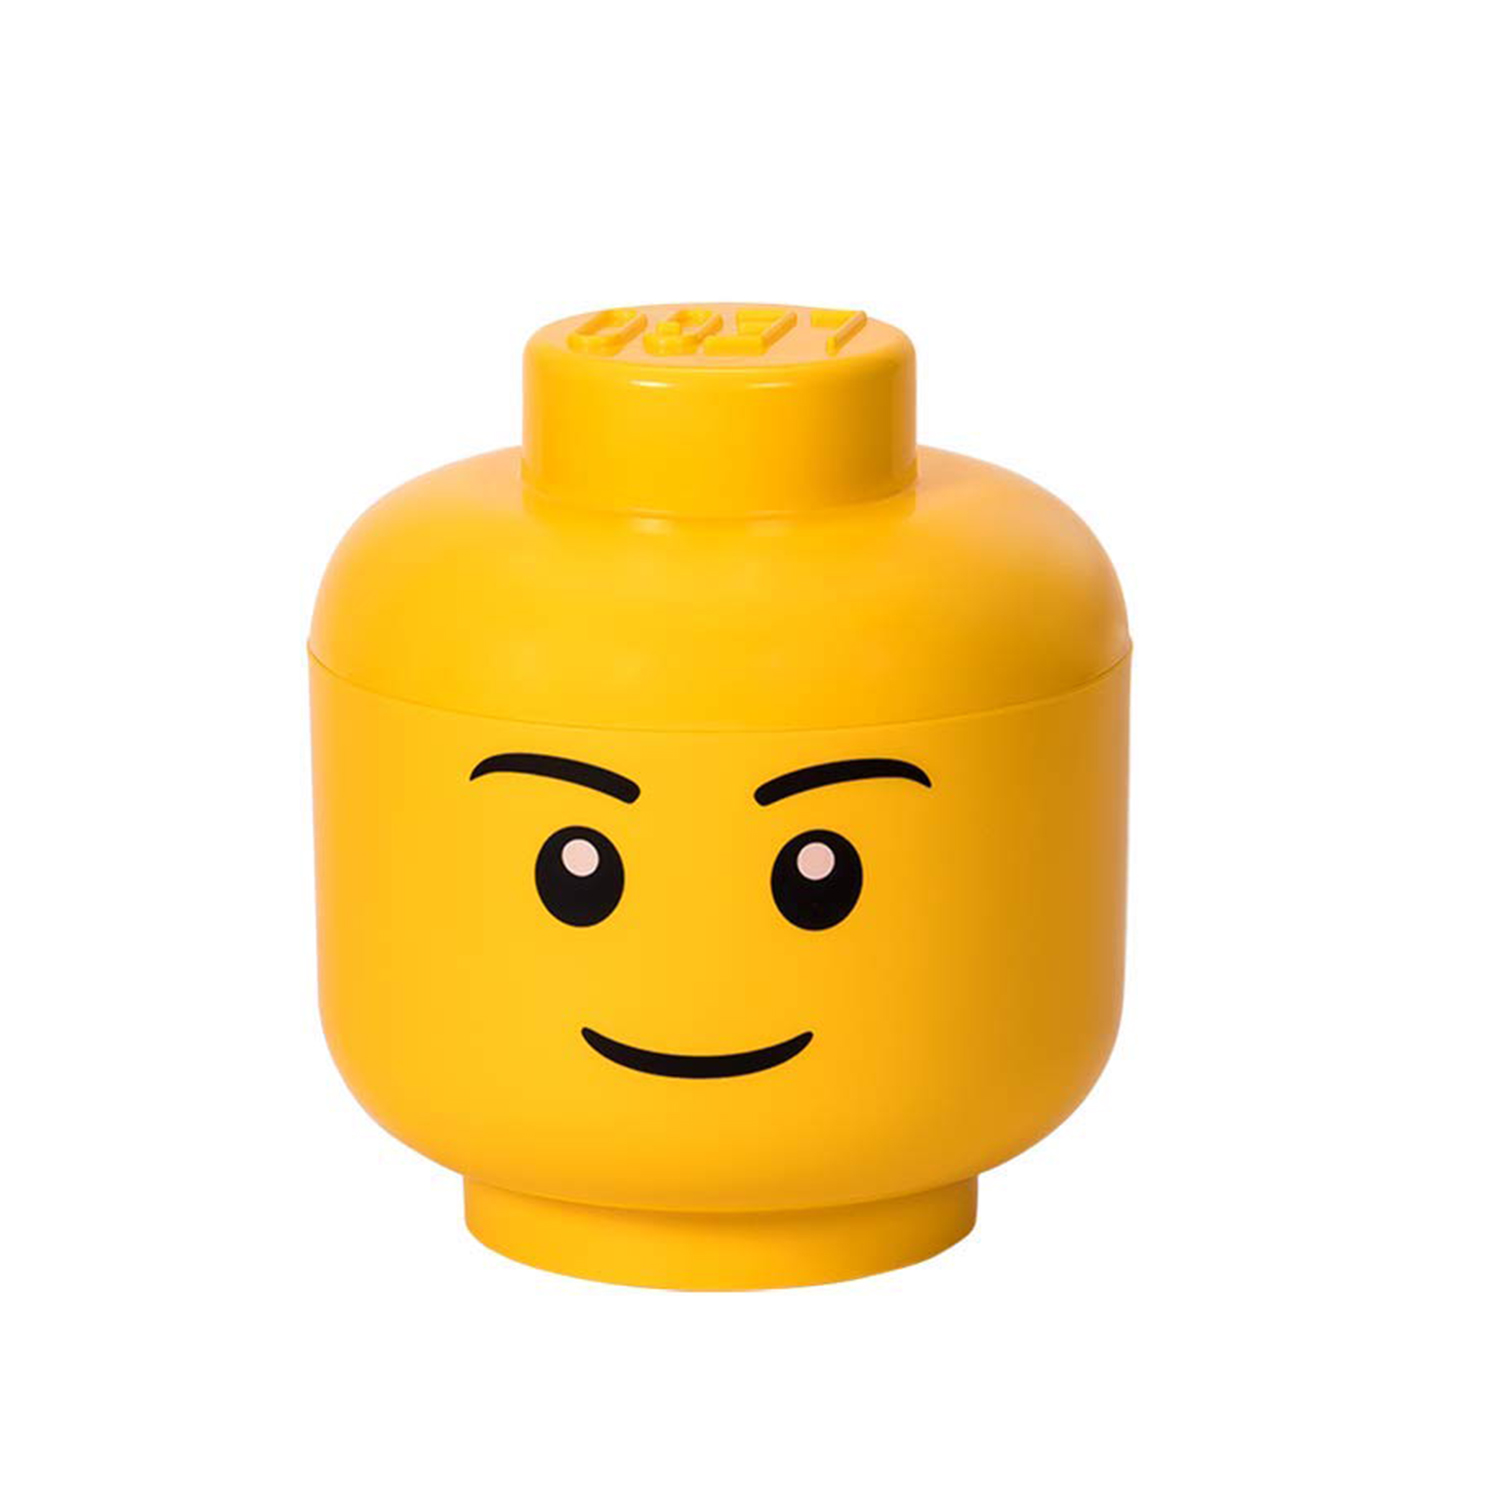 Most Creative Lego Storage: Room Copenhagen Lego Storage Head (Large)